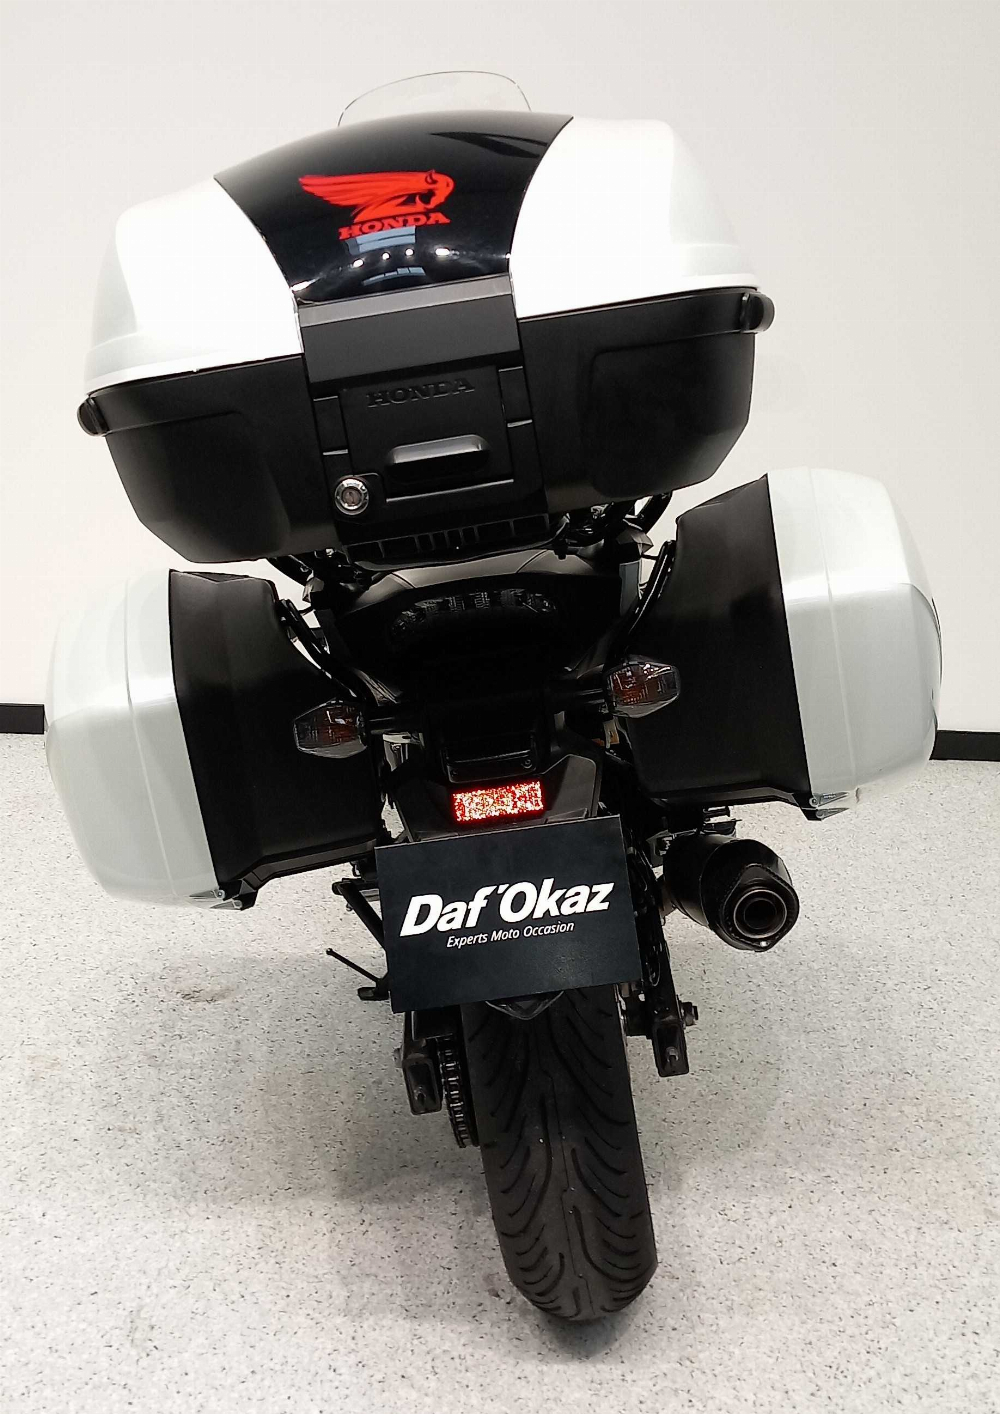 Honda CBF 1000 F ABS 2014 vue arrière